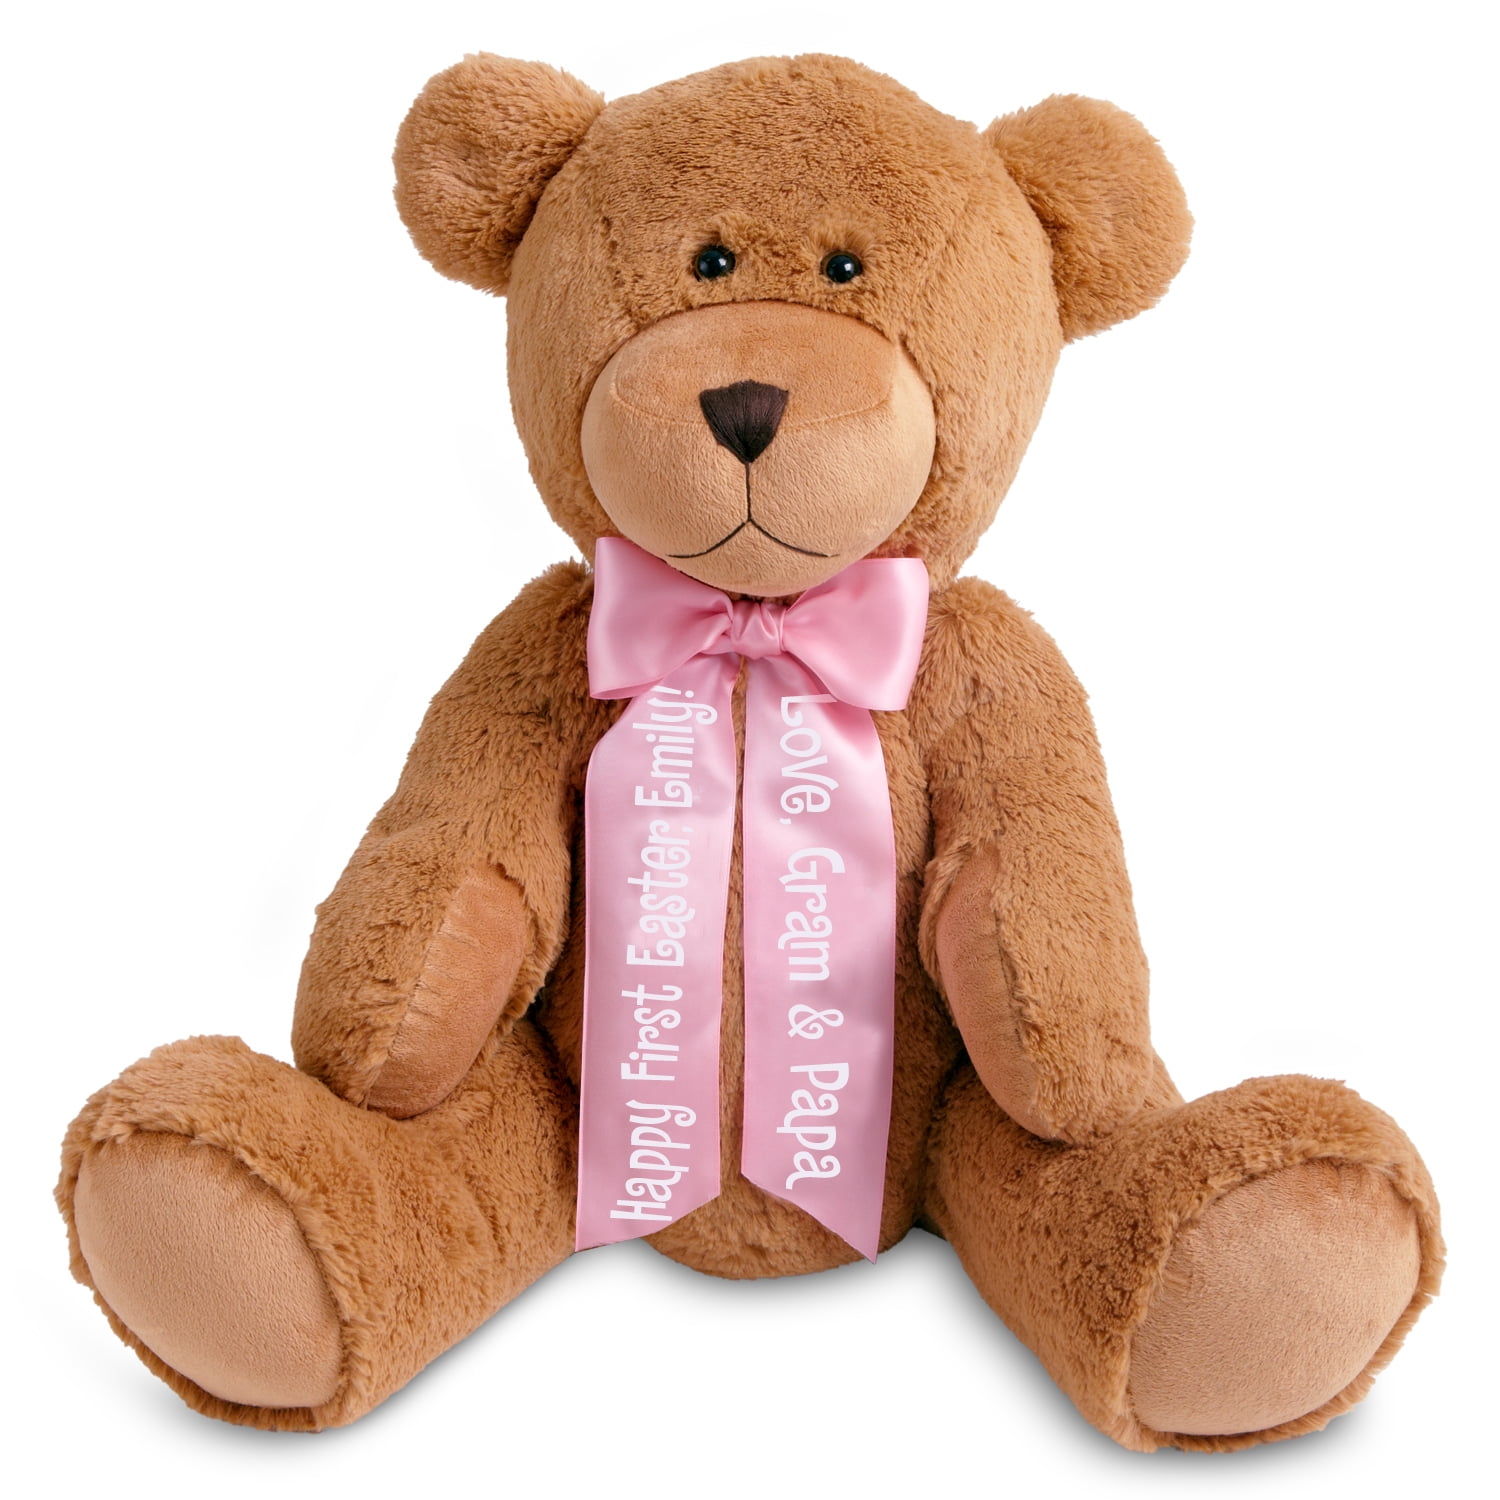 oversized teddy bear walmart